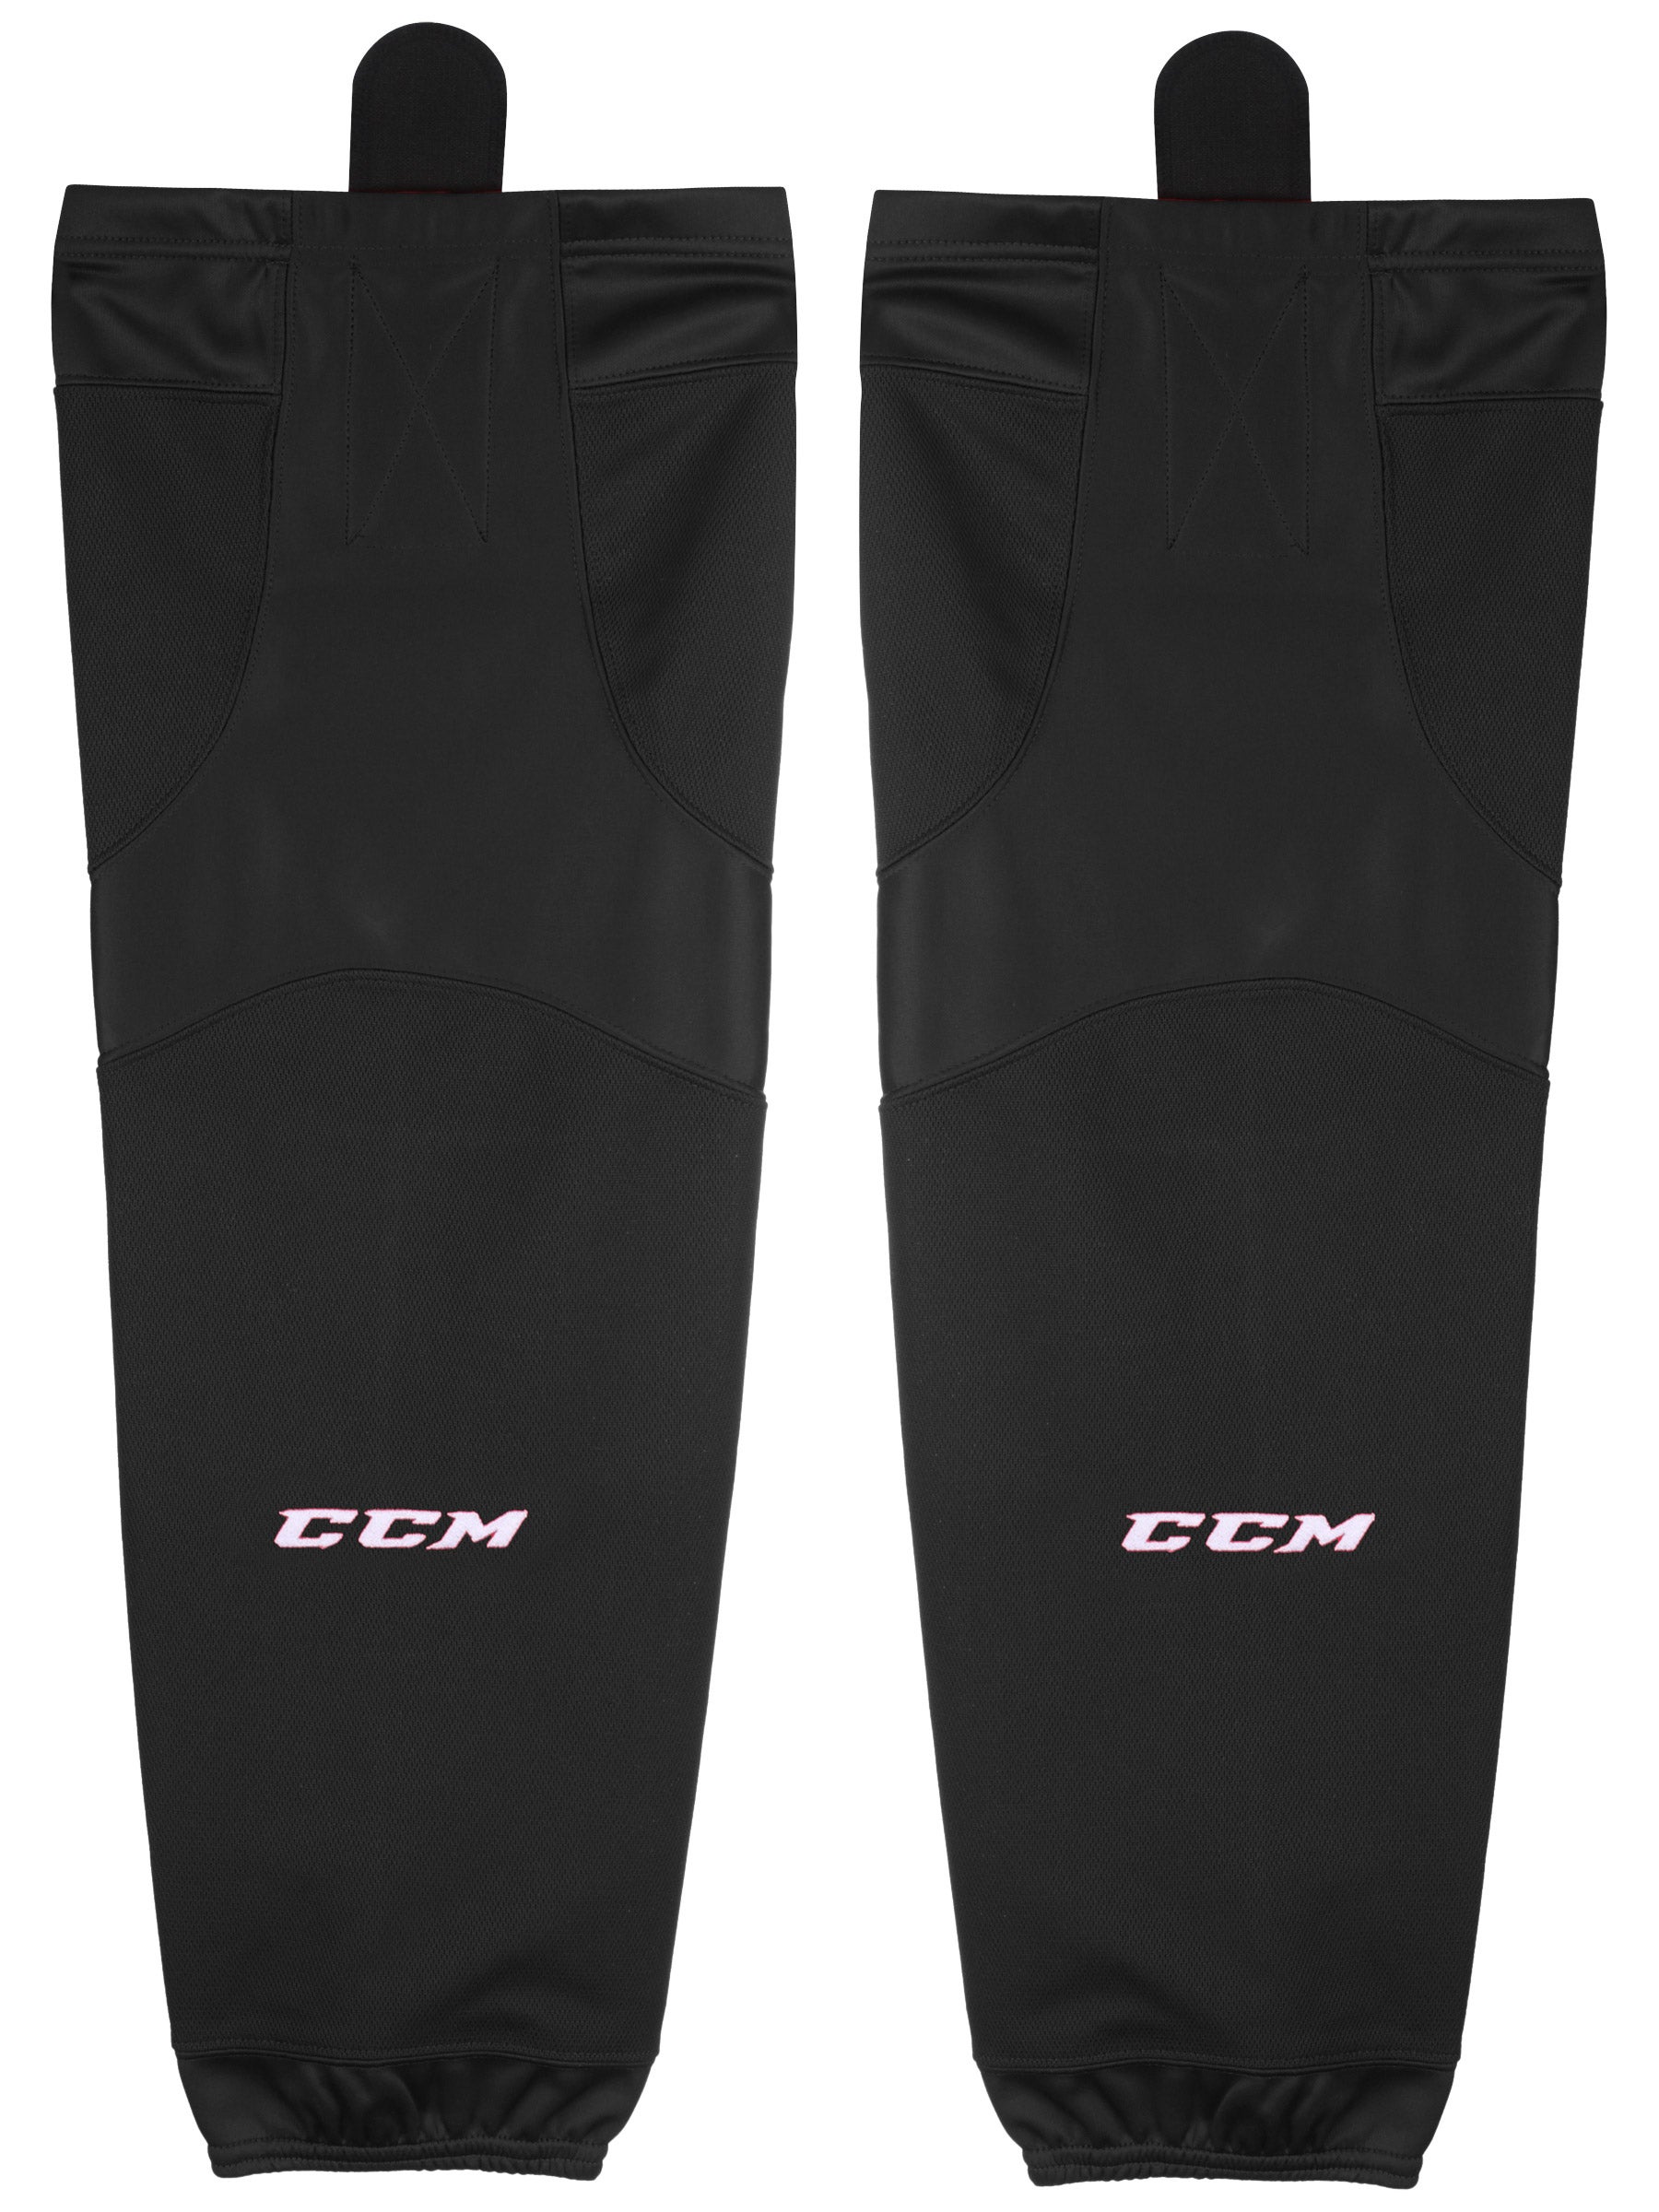 CCM Edge Pro Stock Hockey Shin Pad Socks NEW Edmonton Oilers White 9278 